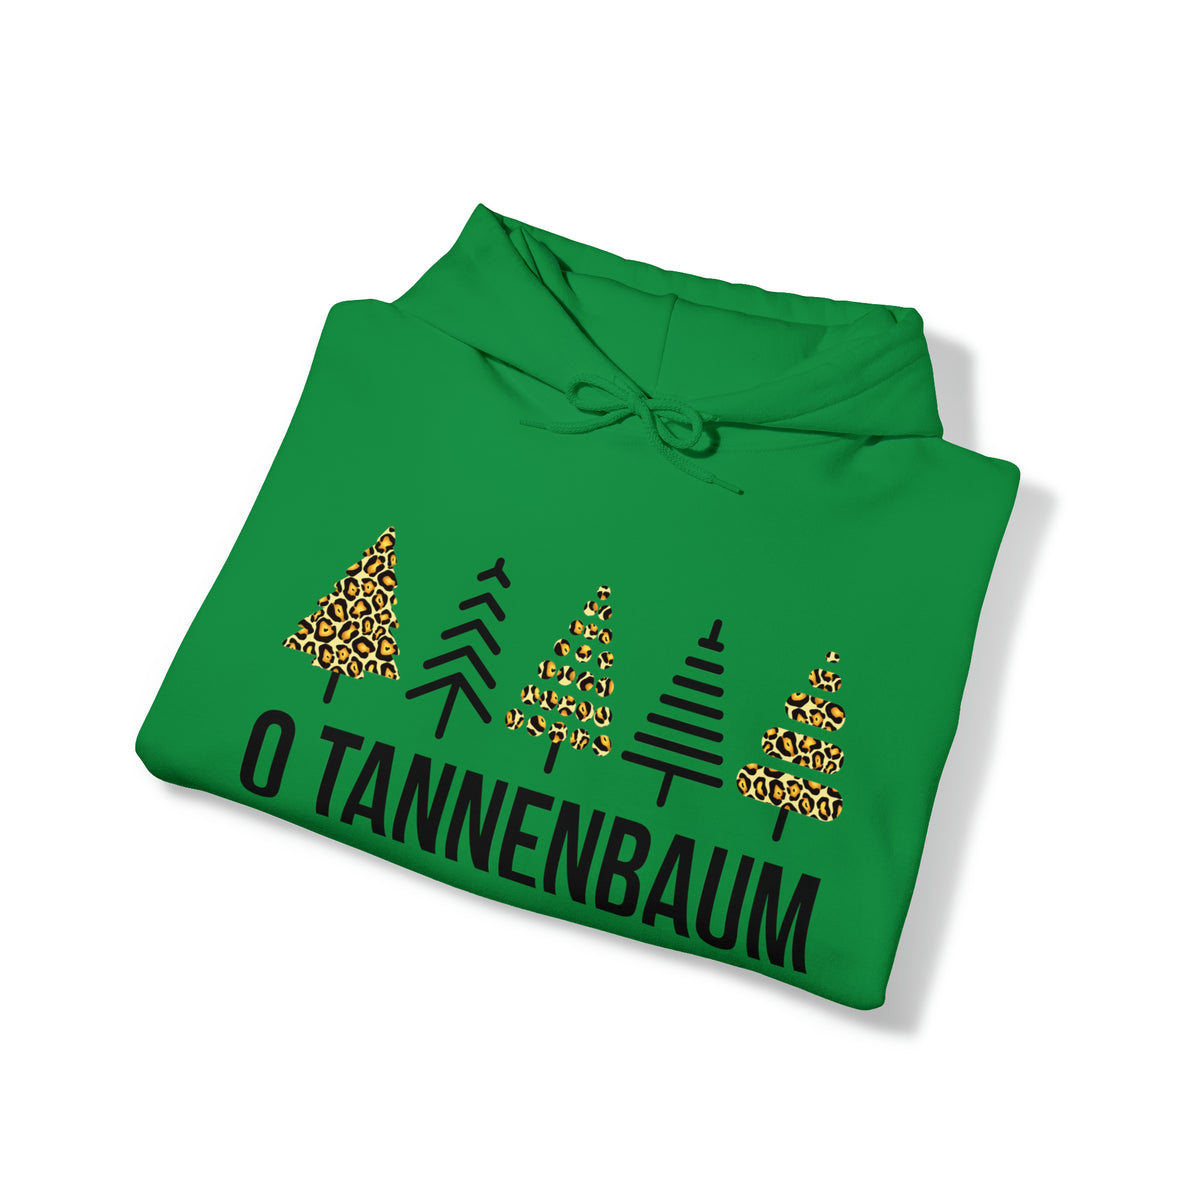 Tannenbaum Leopard Print Christmas Tree Shirt | German Christmas Gift | Unisex Hooded Sweatshirt